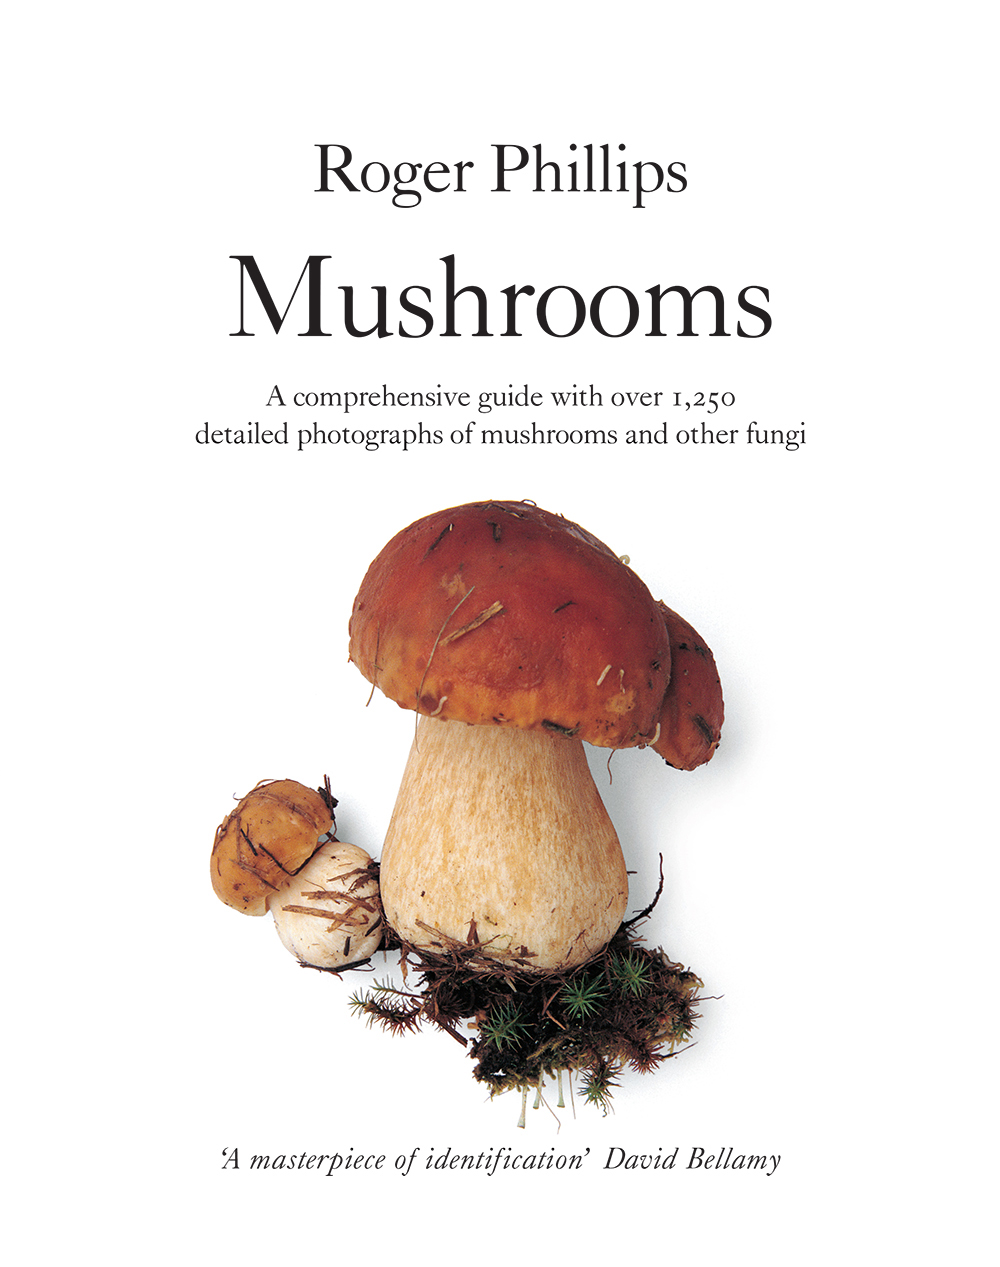 Mushrooms by Roger Phillips